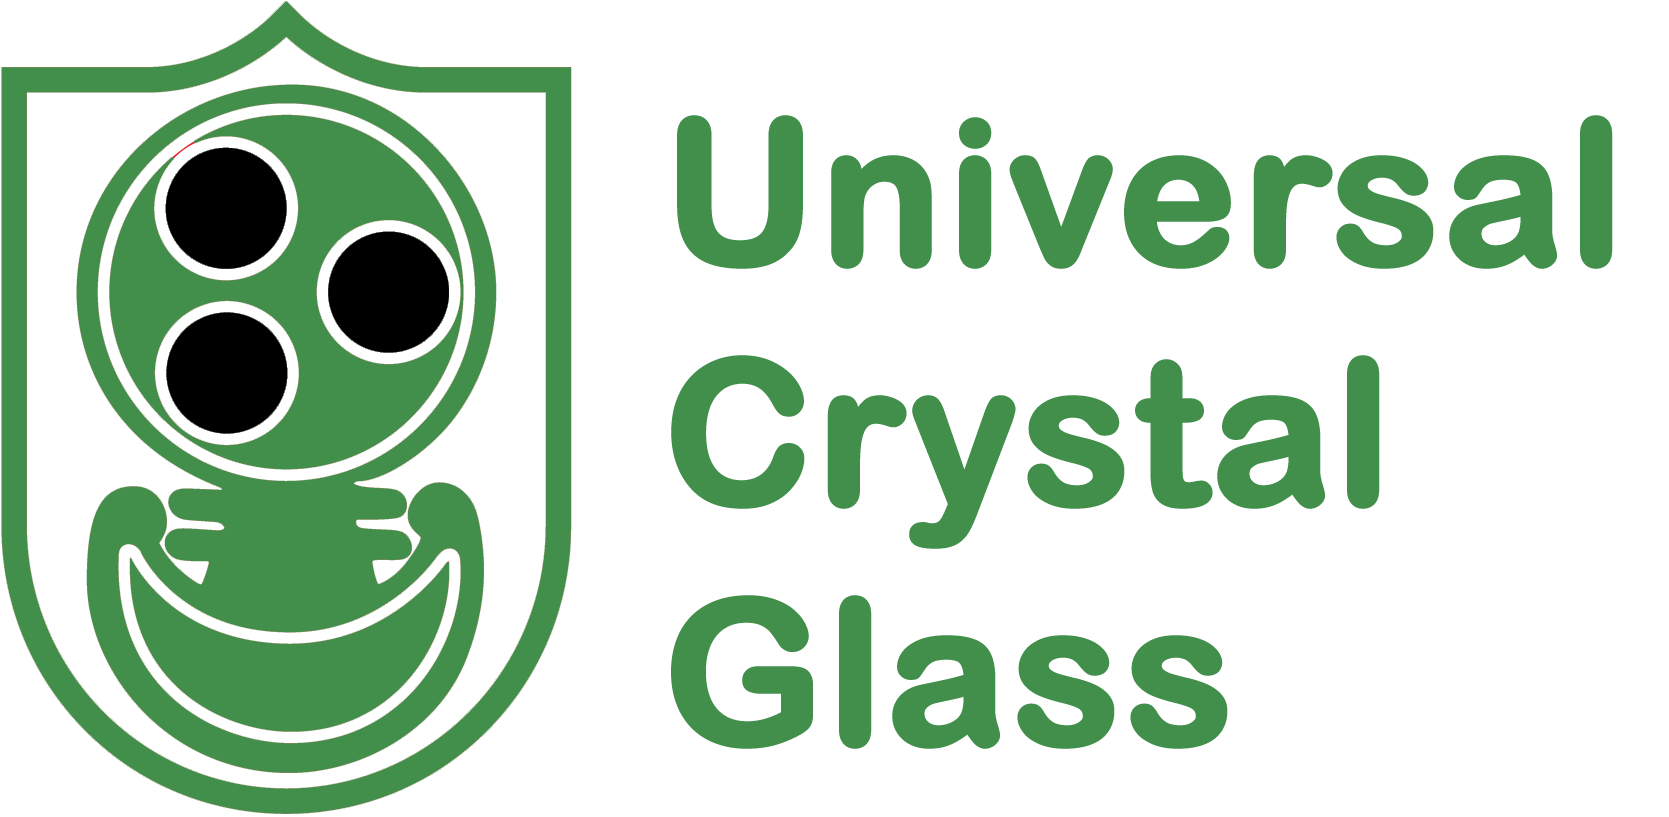 Universal Crystal Glass Web Site